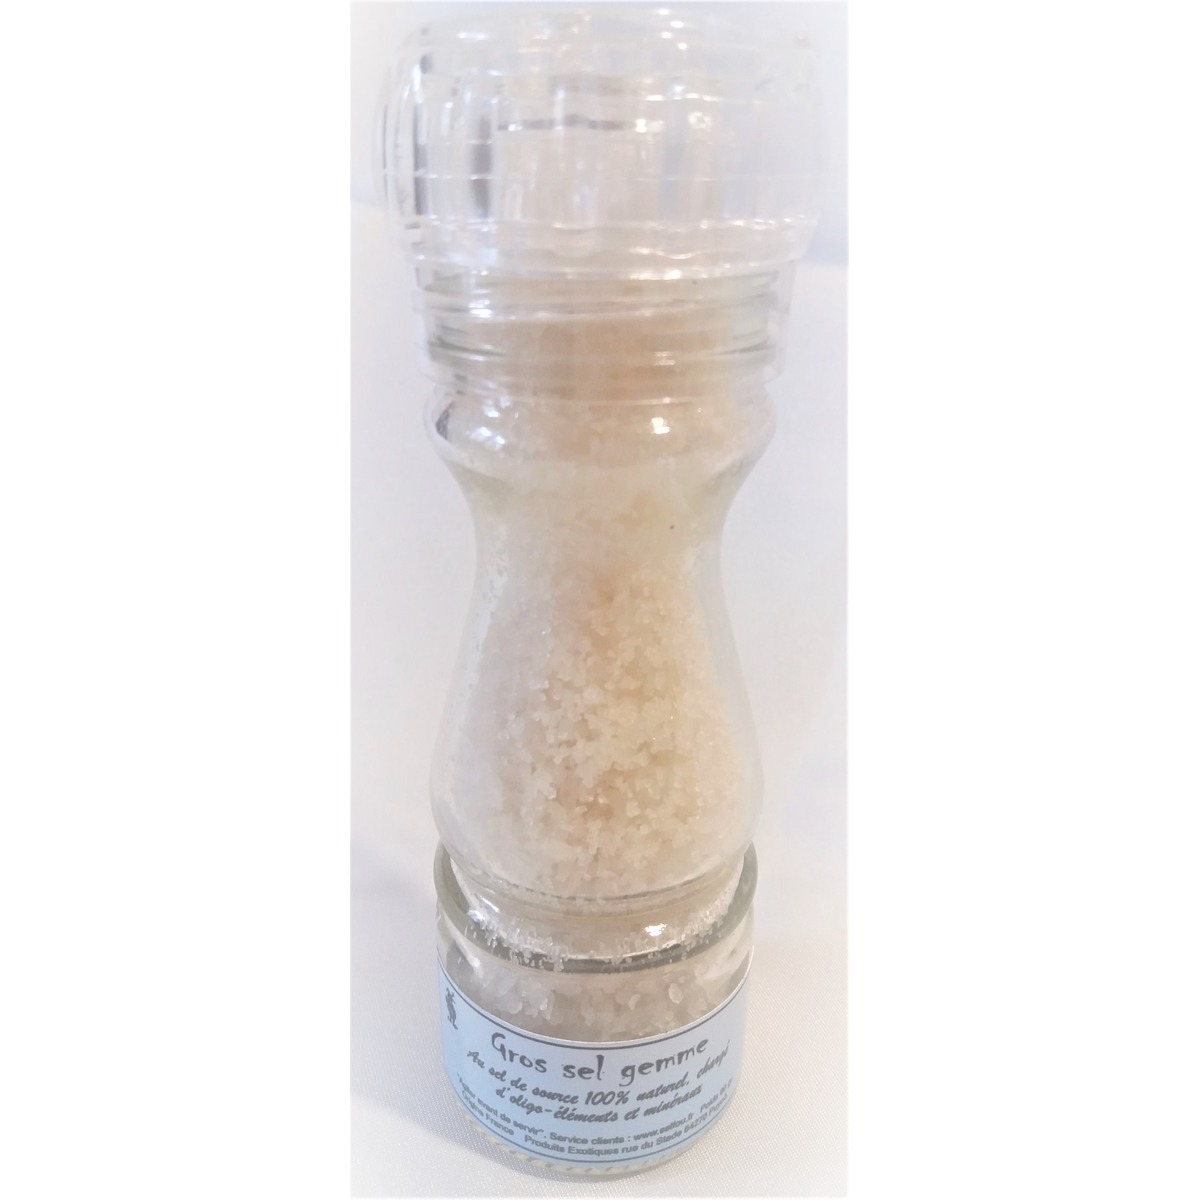 Gros sel de source 100% naturel, recharge sel gemme 1 Kg. Sel de